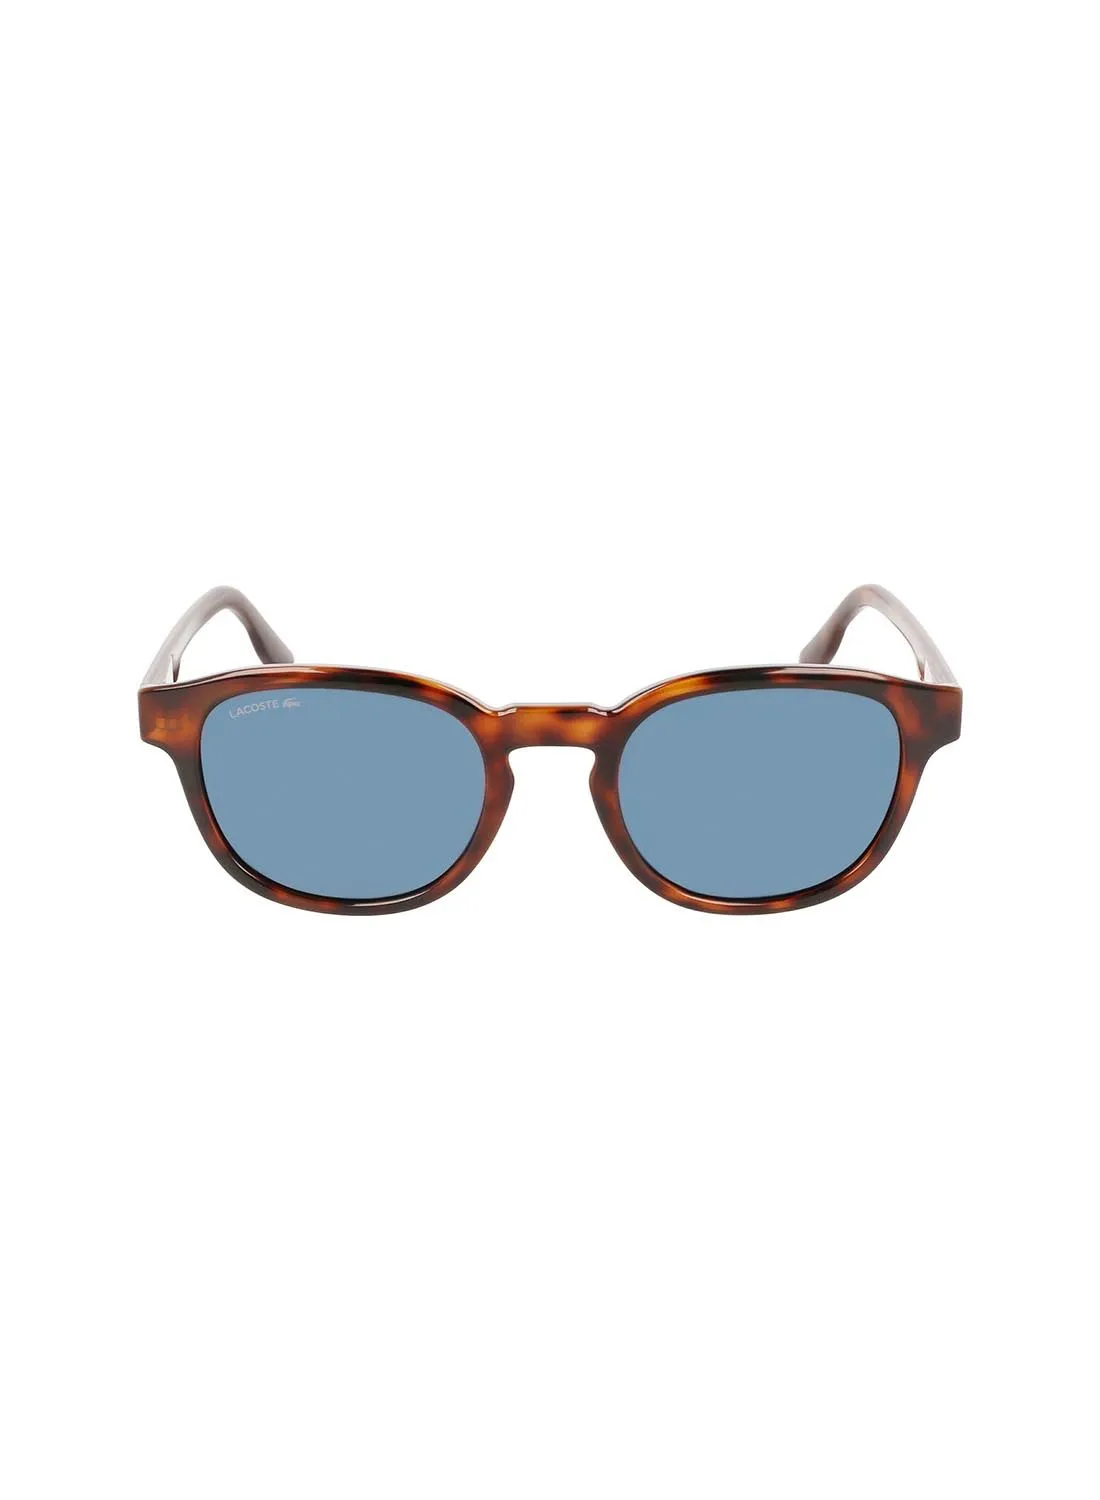 LACOSTE UV Rays Protection Eyewear Sunglasses L968S-230-5121